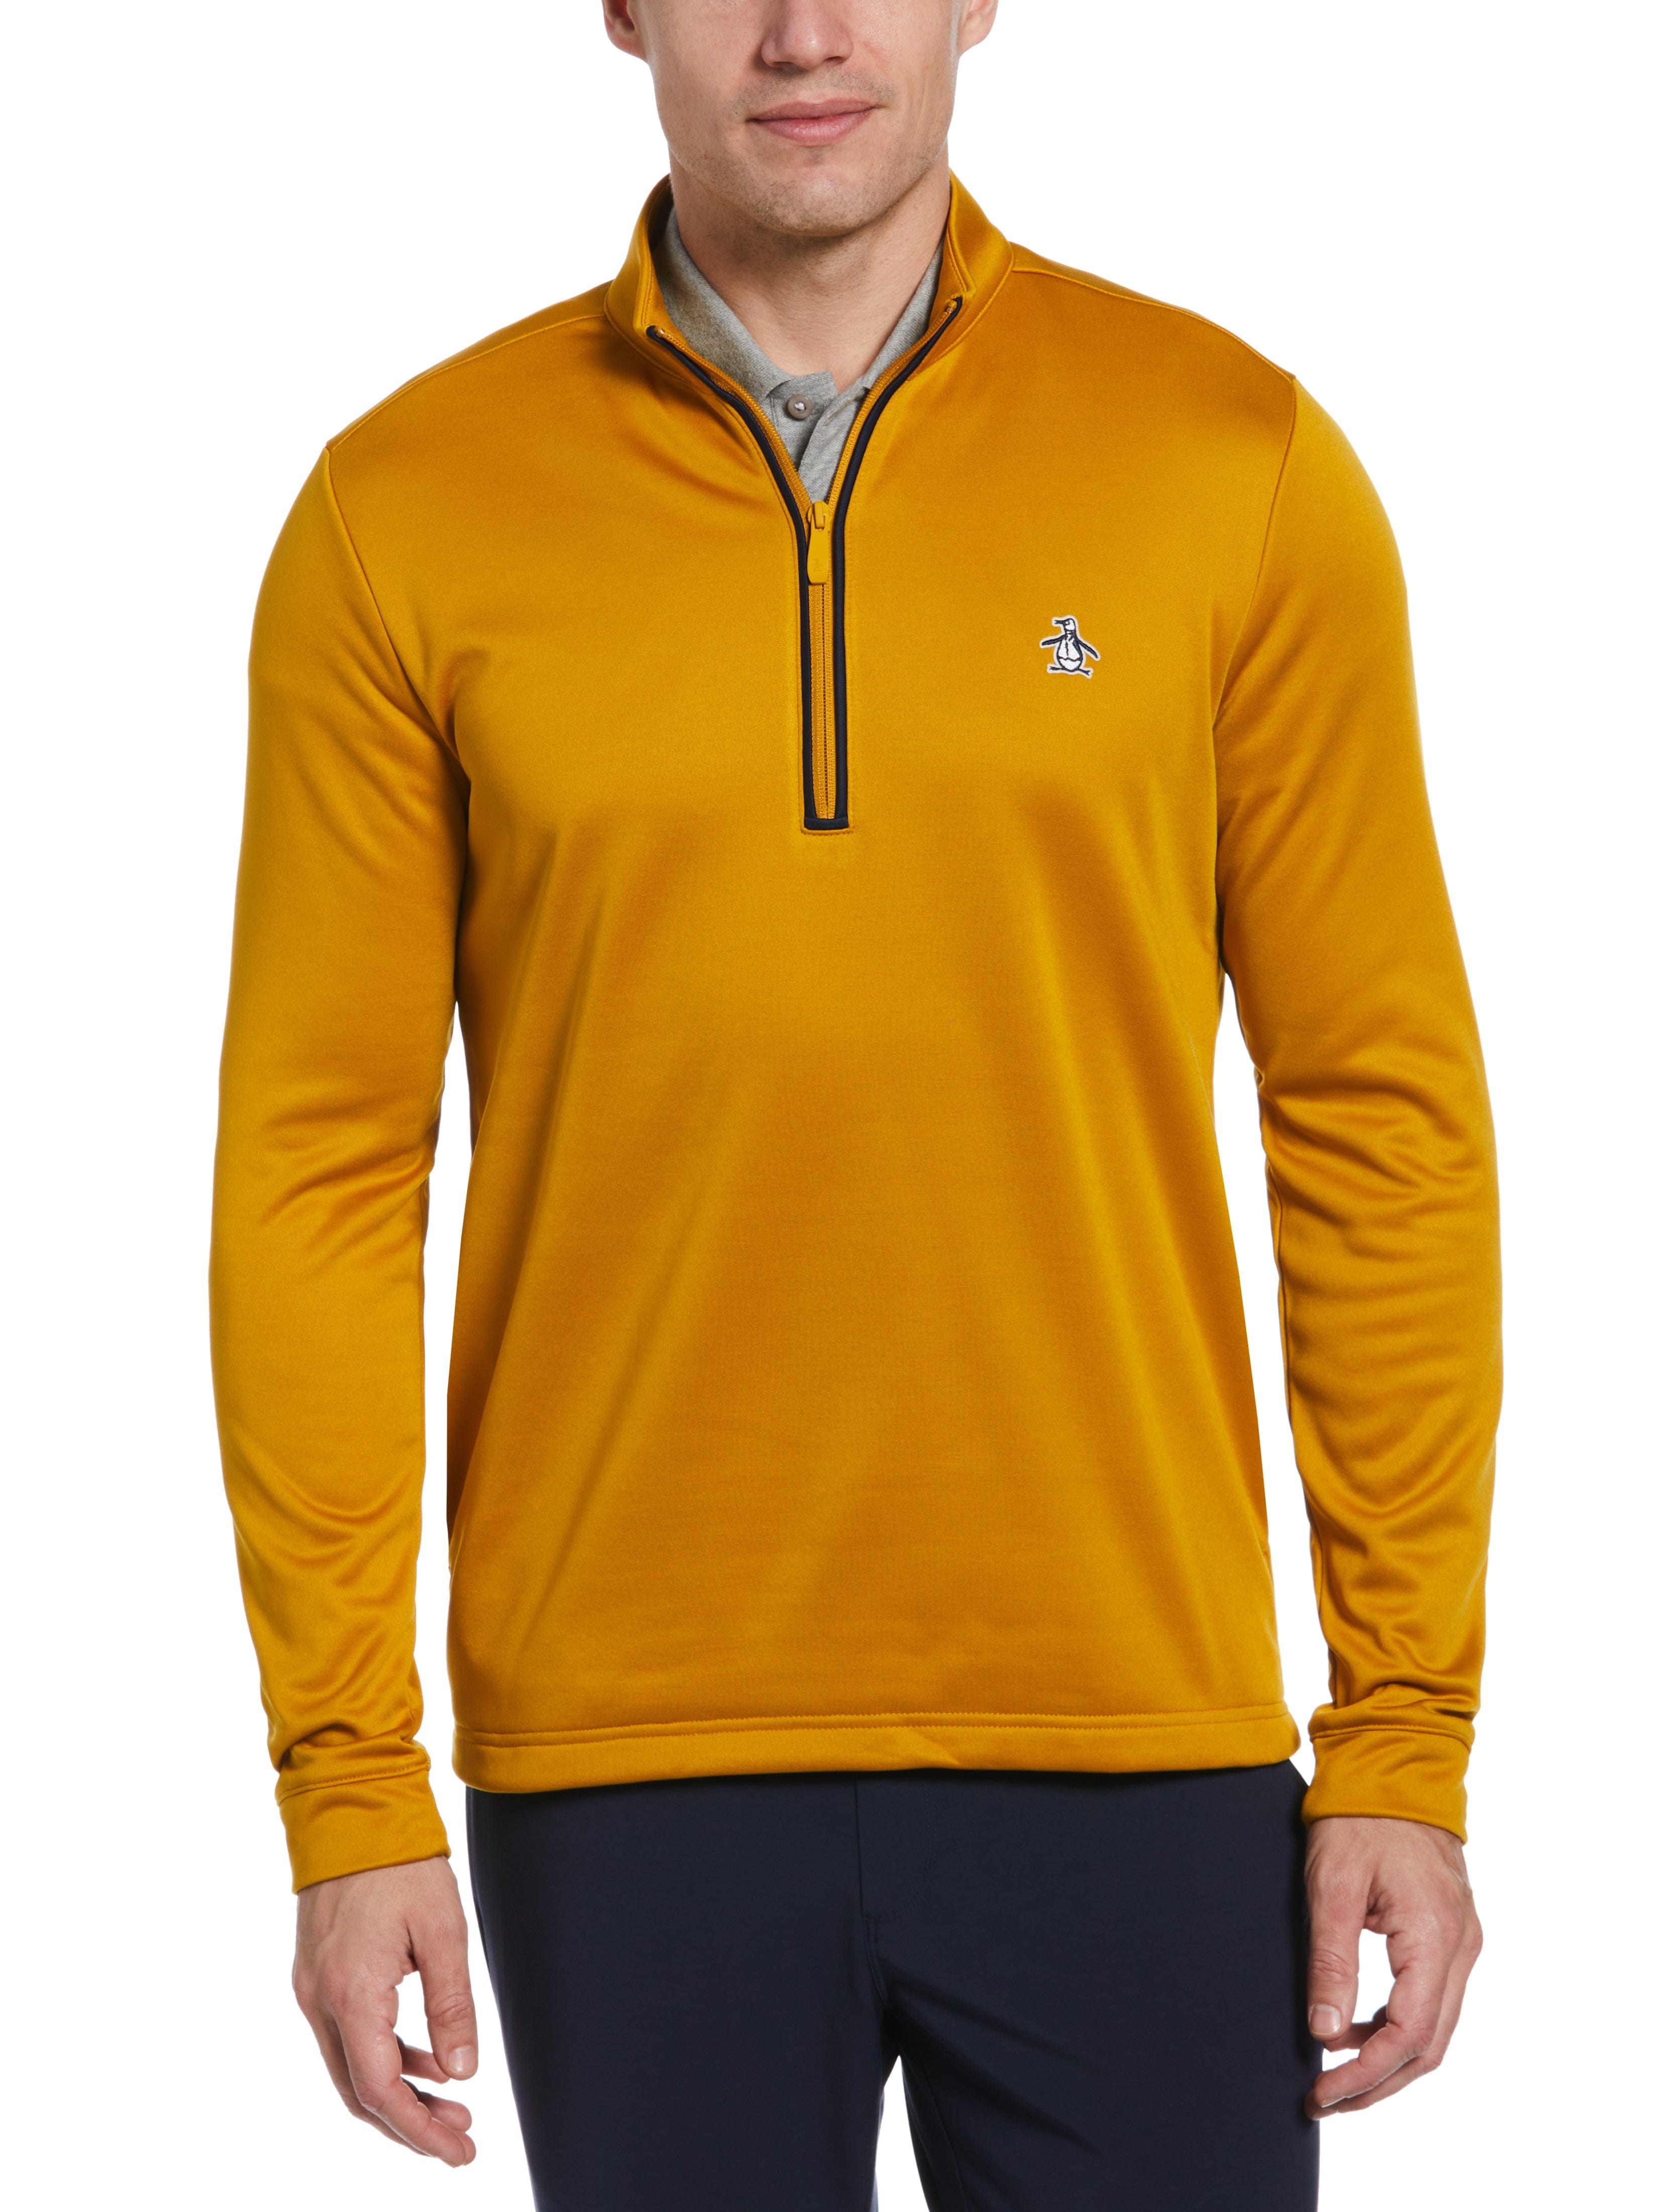 Original Penguin Mens 1/4 Zip Pull Over Jacket Top, Size Medium, Chai Tea Yellow, 100% Polyester | Golf Apparel Shop